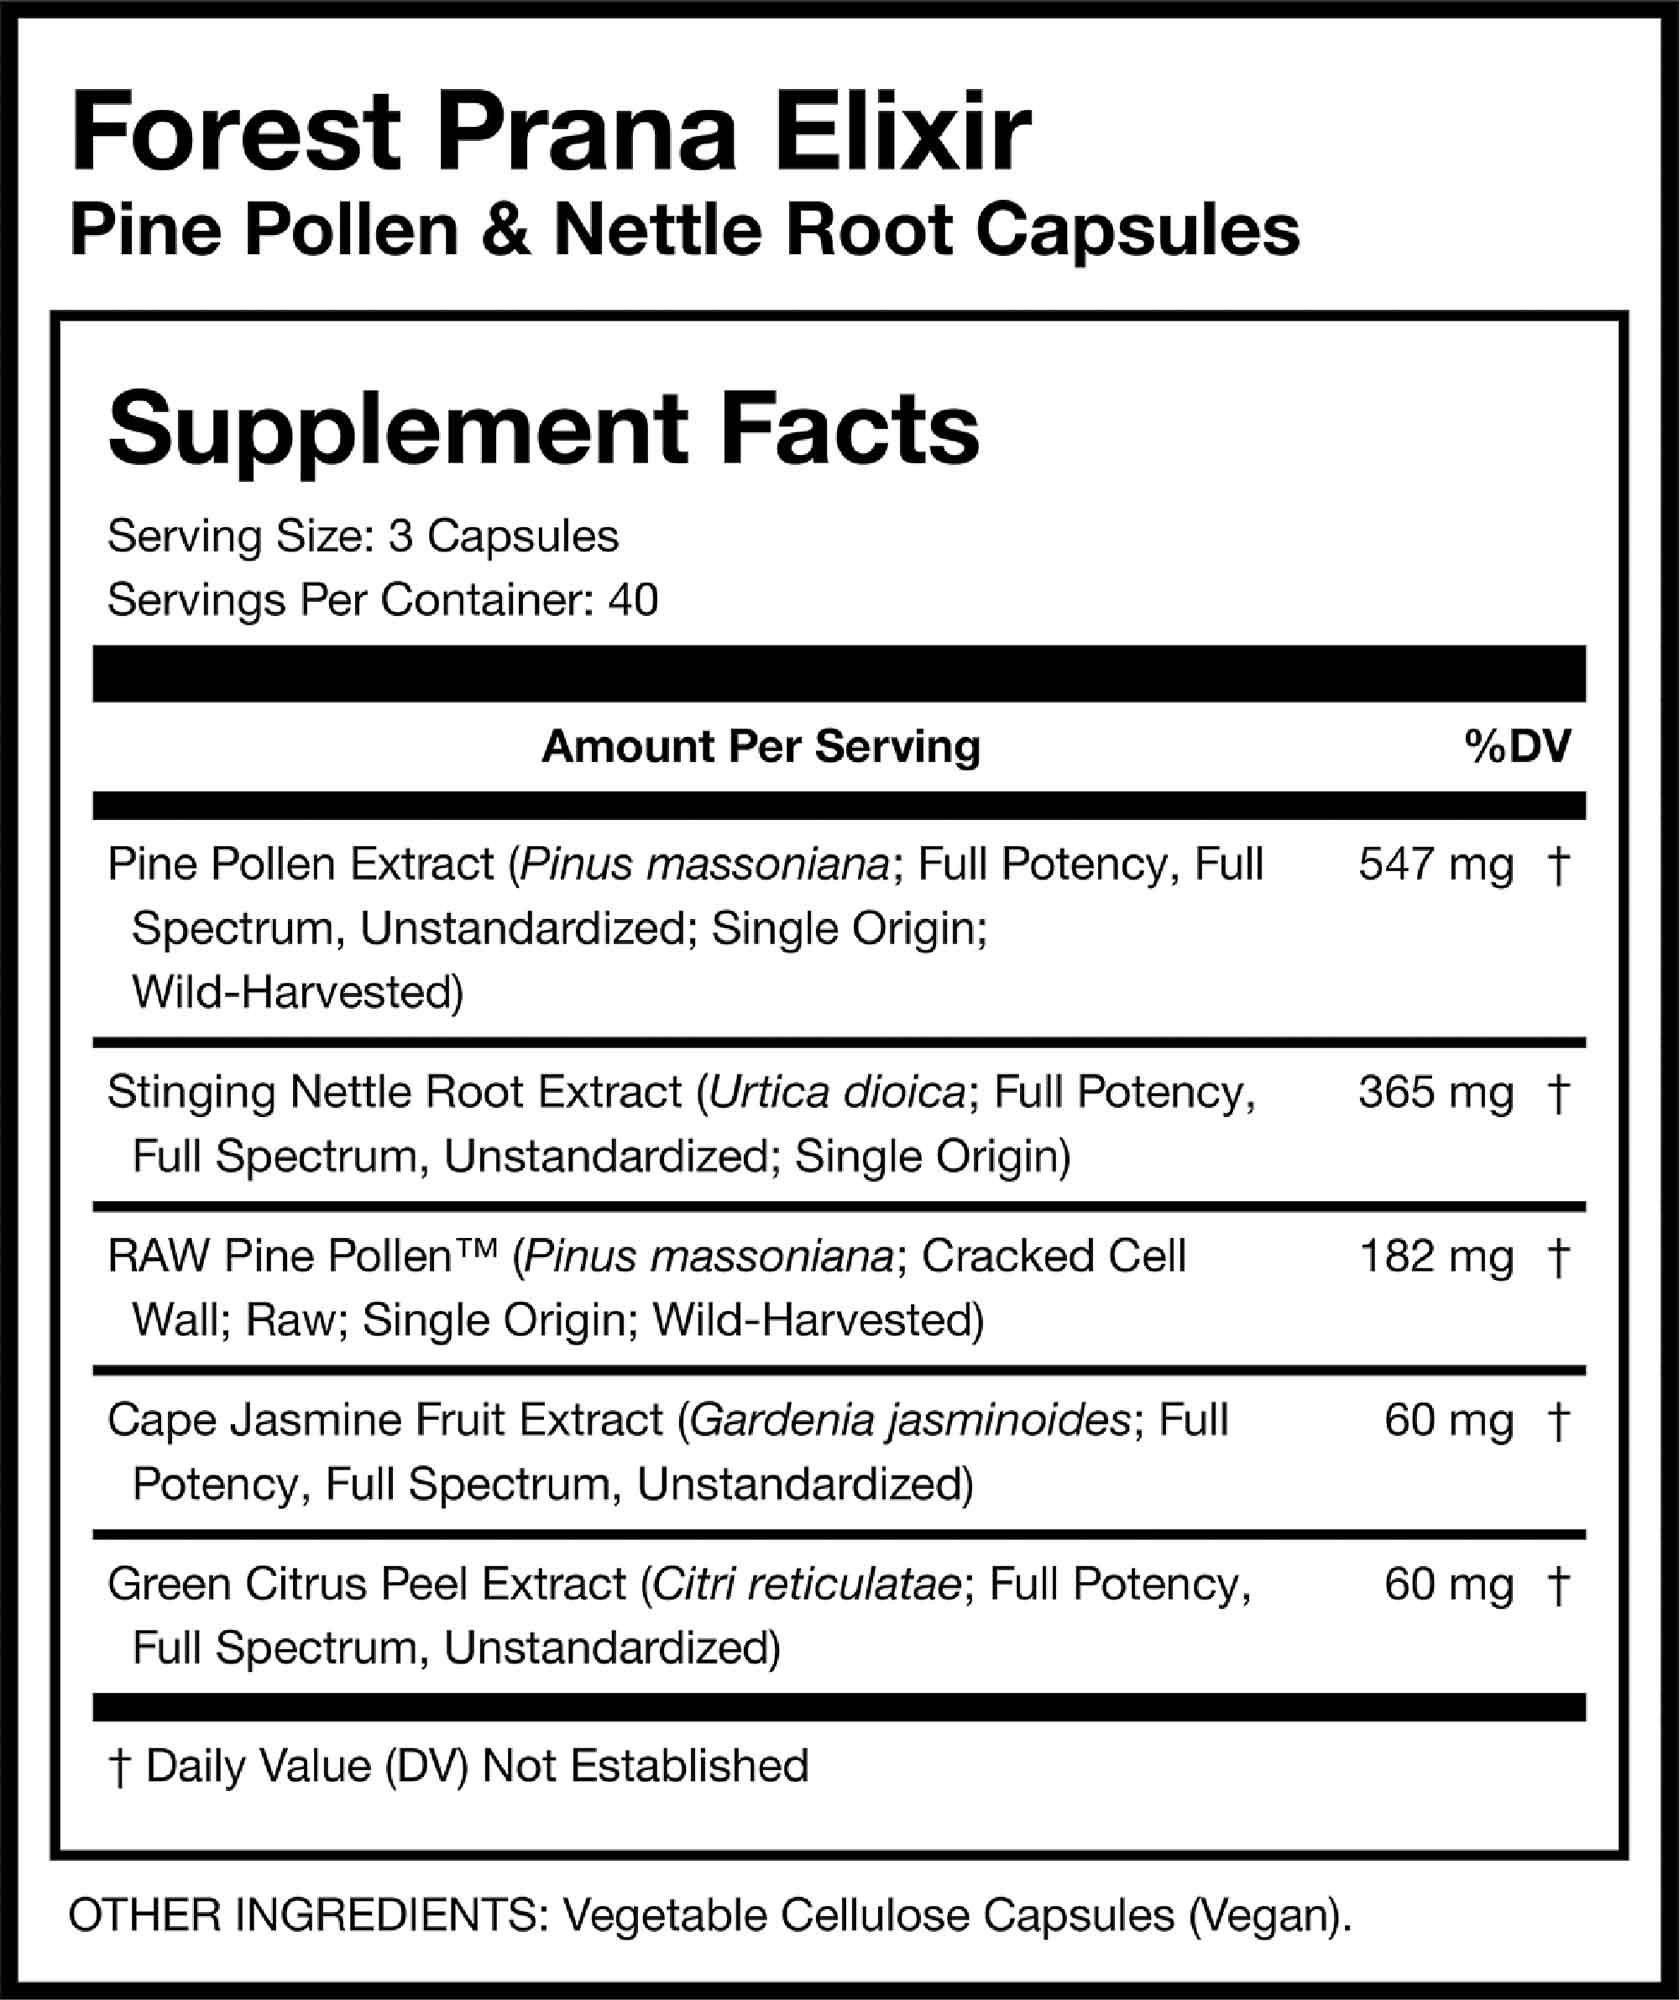 Forest Prana Elixir Pine Pollen & Nettle Root Capsules Supplement Facts Card